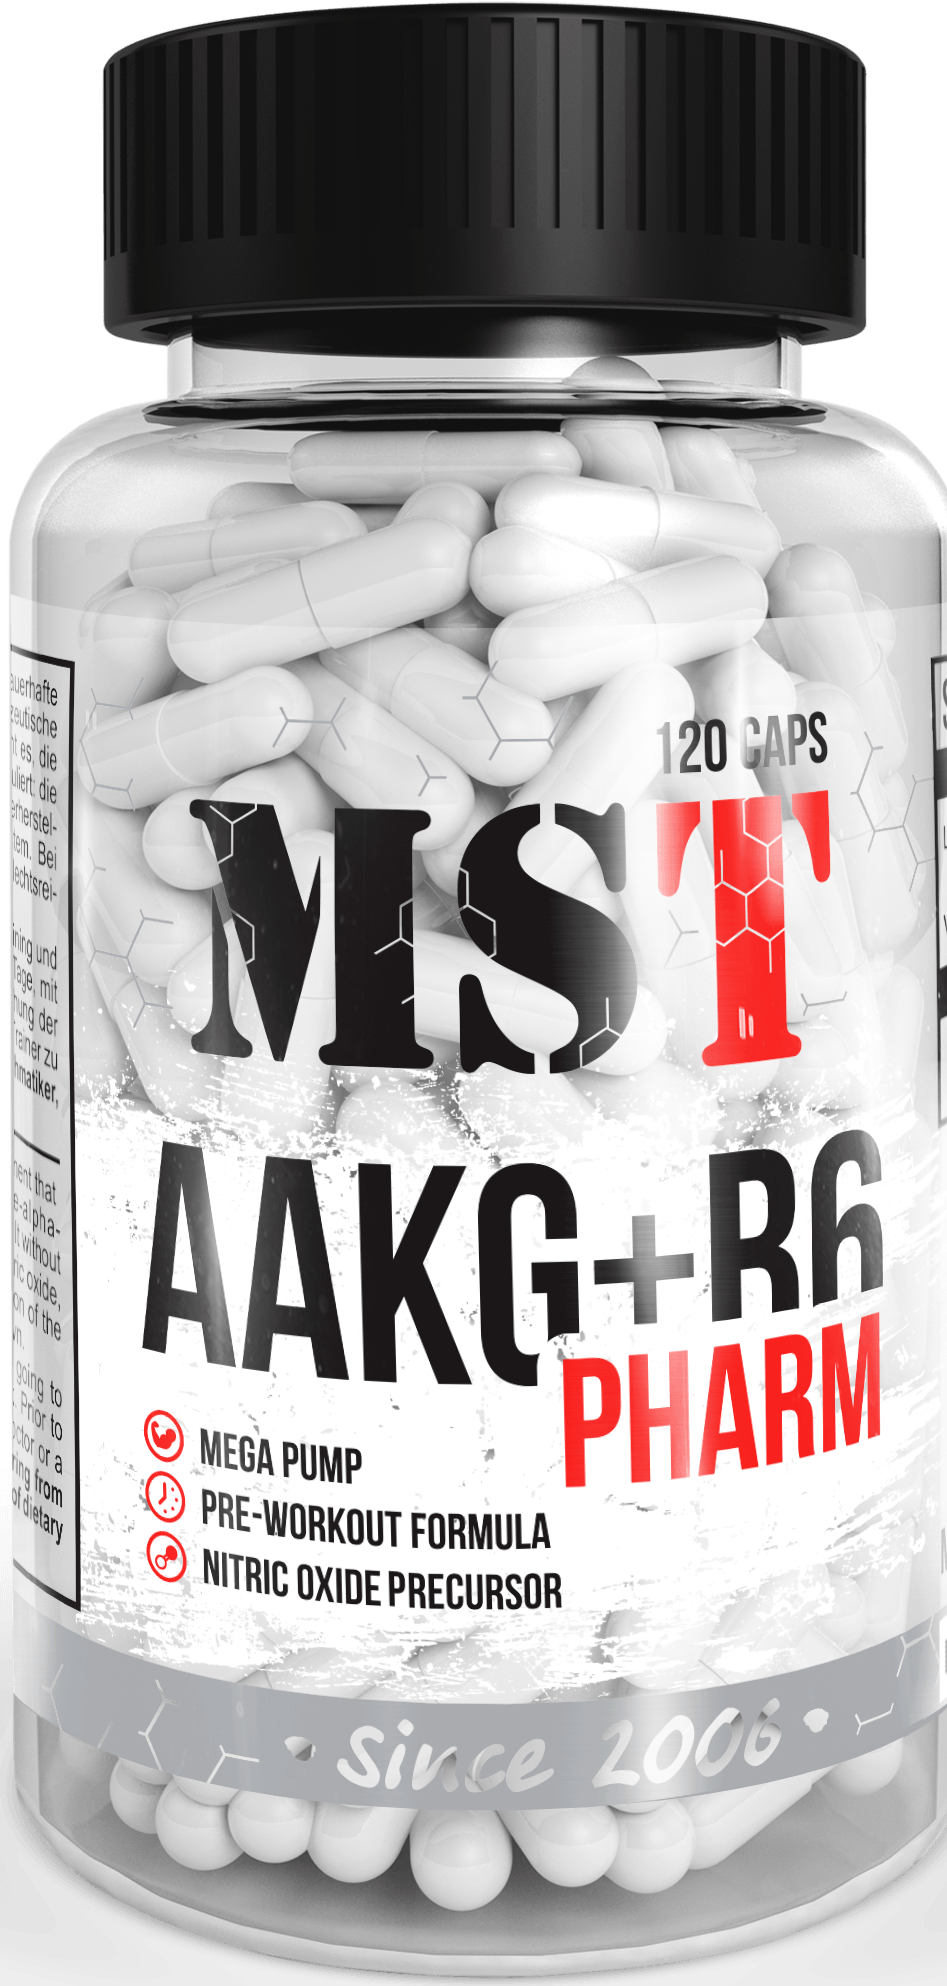 AAKG+B6 Pharm, 120 шт, MST Nutrition. Аргинин. Восстановление Укрепление иммунитета Пампинг мышц Антиоксидантные свойства Снижение холестерина Донатор оксида азота 